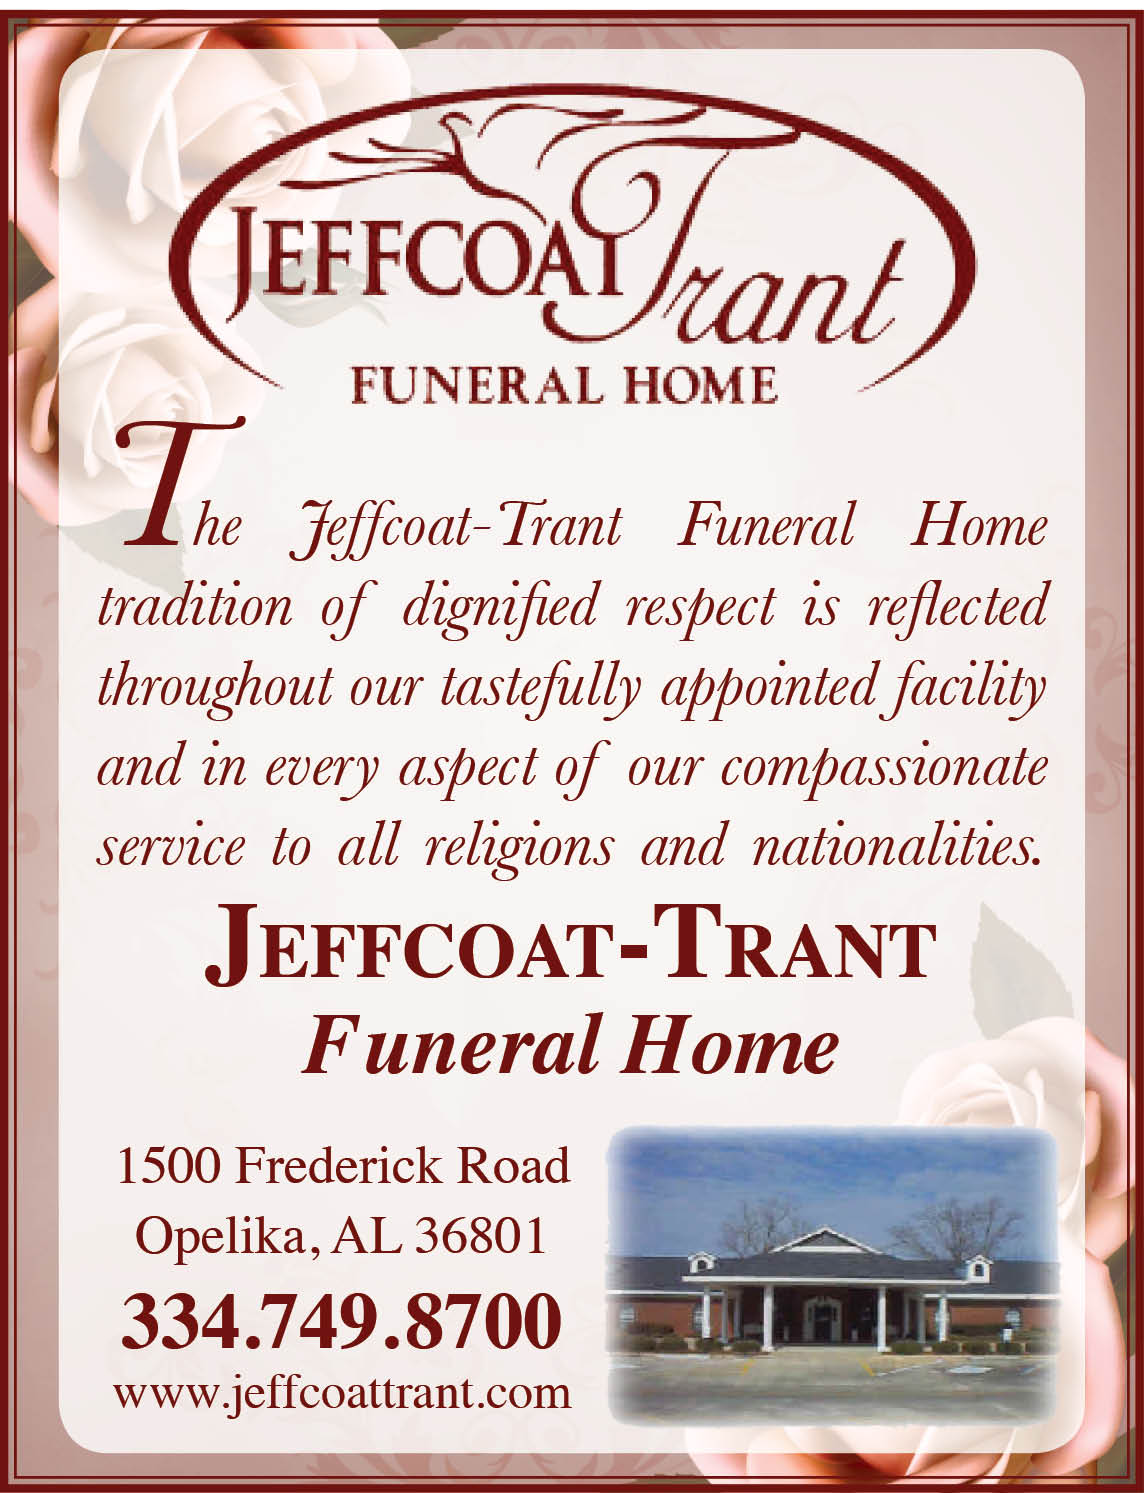 JeffcoatTrant Funeral Home Opelika, AL Parishes Online